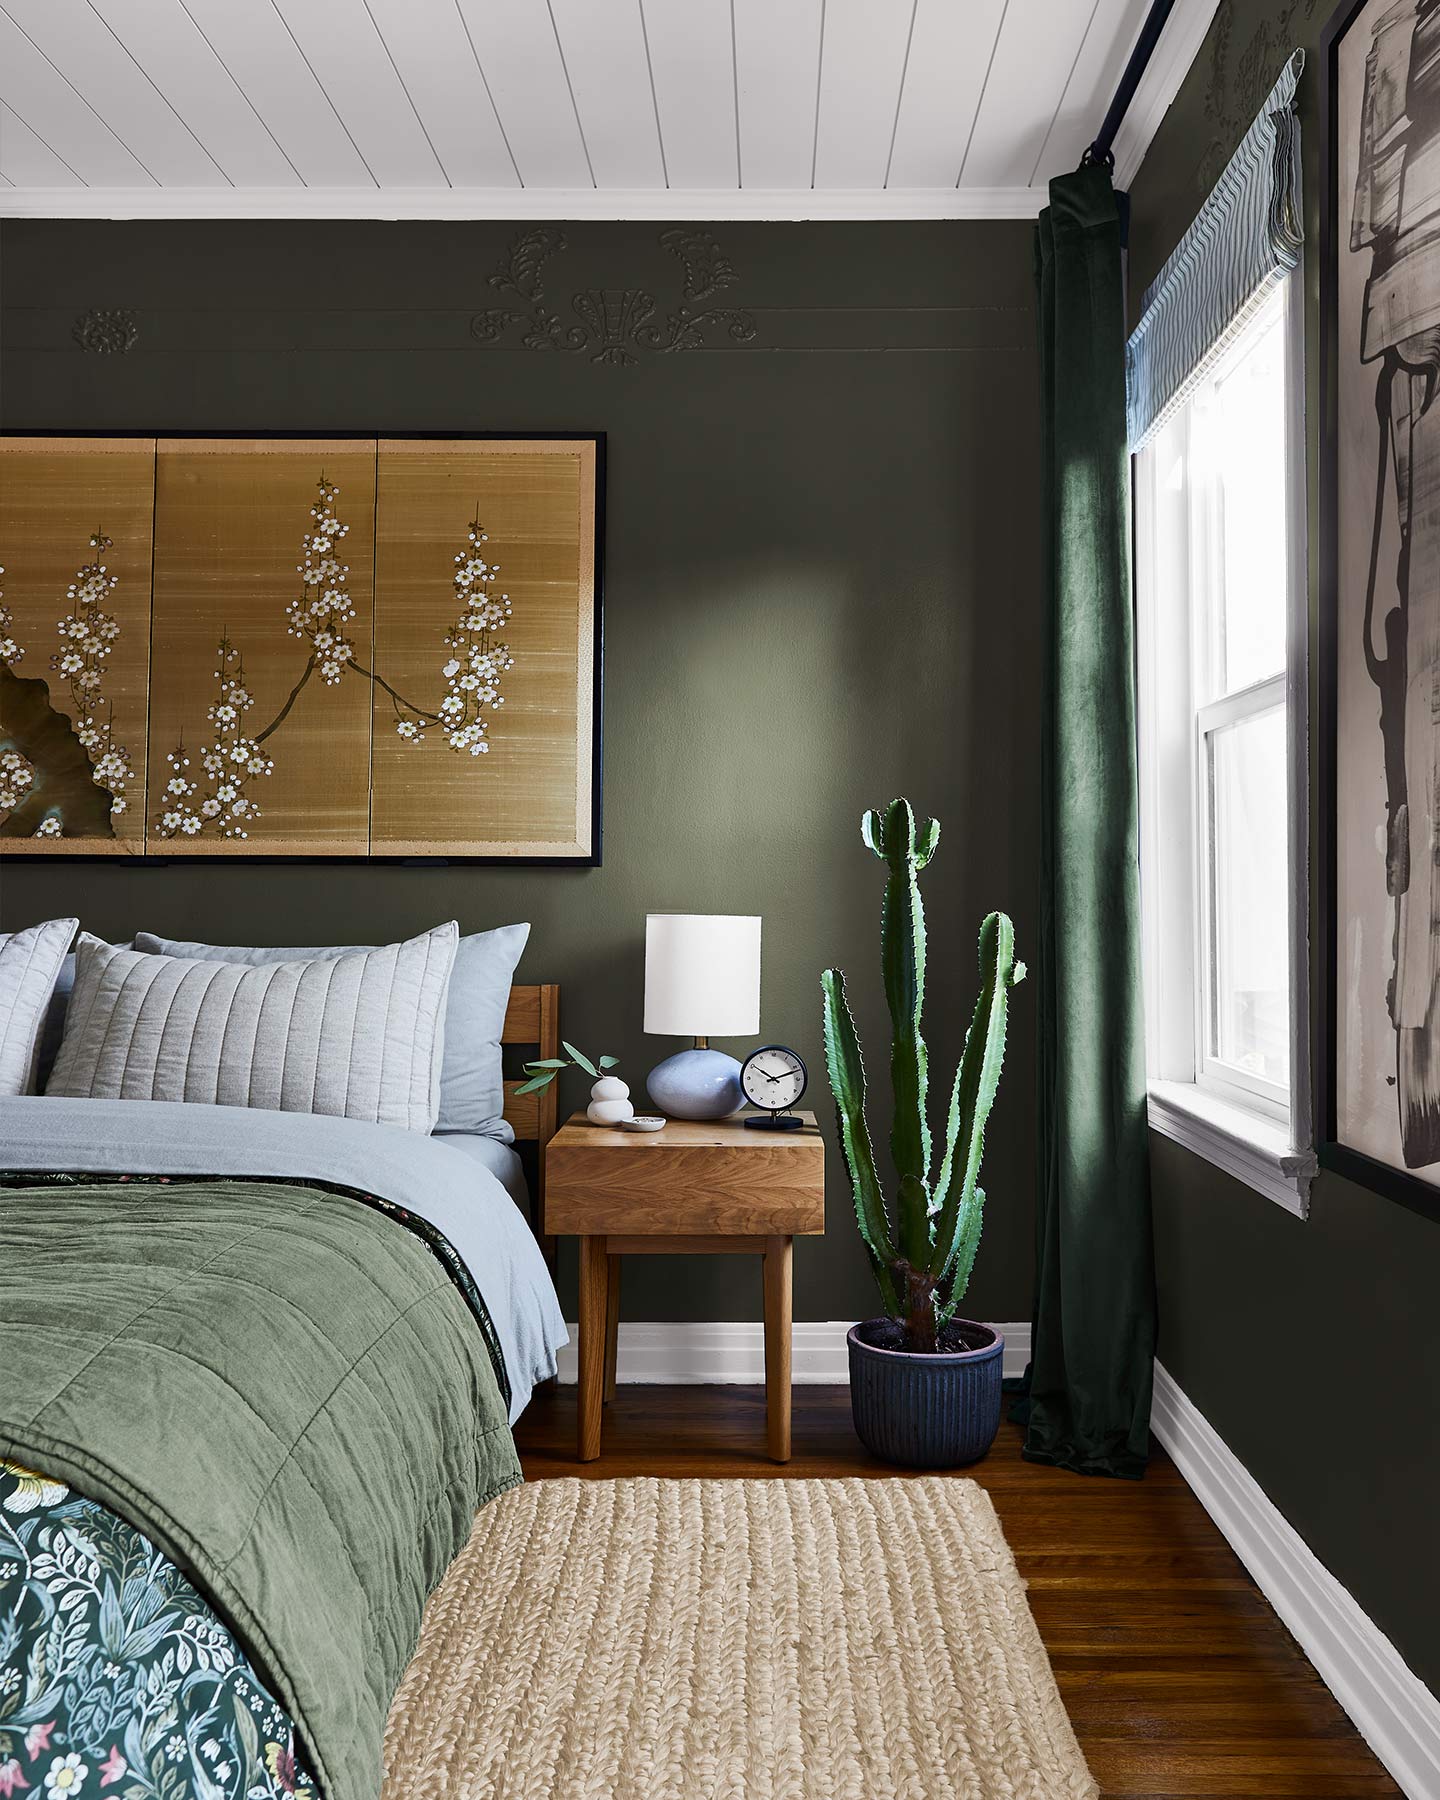 Peek Inside This Dark Green Bedroom For Major Small-Space Inspo